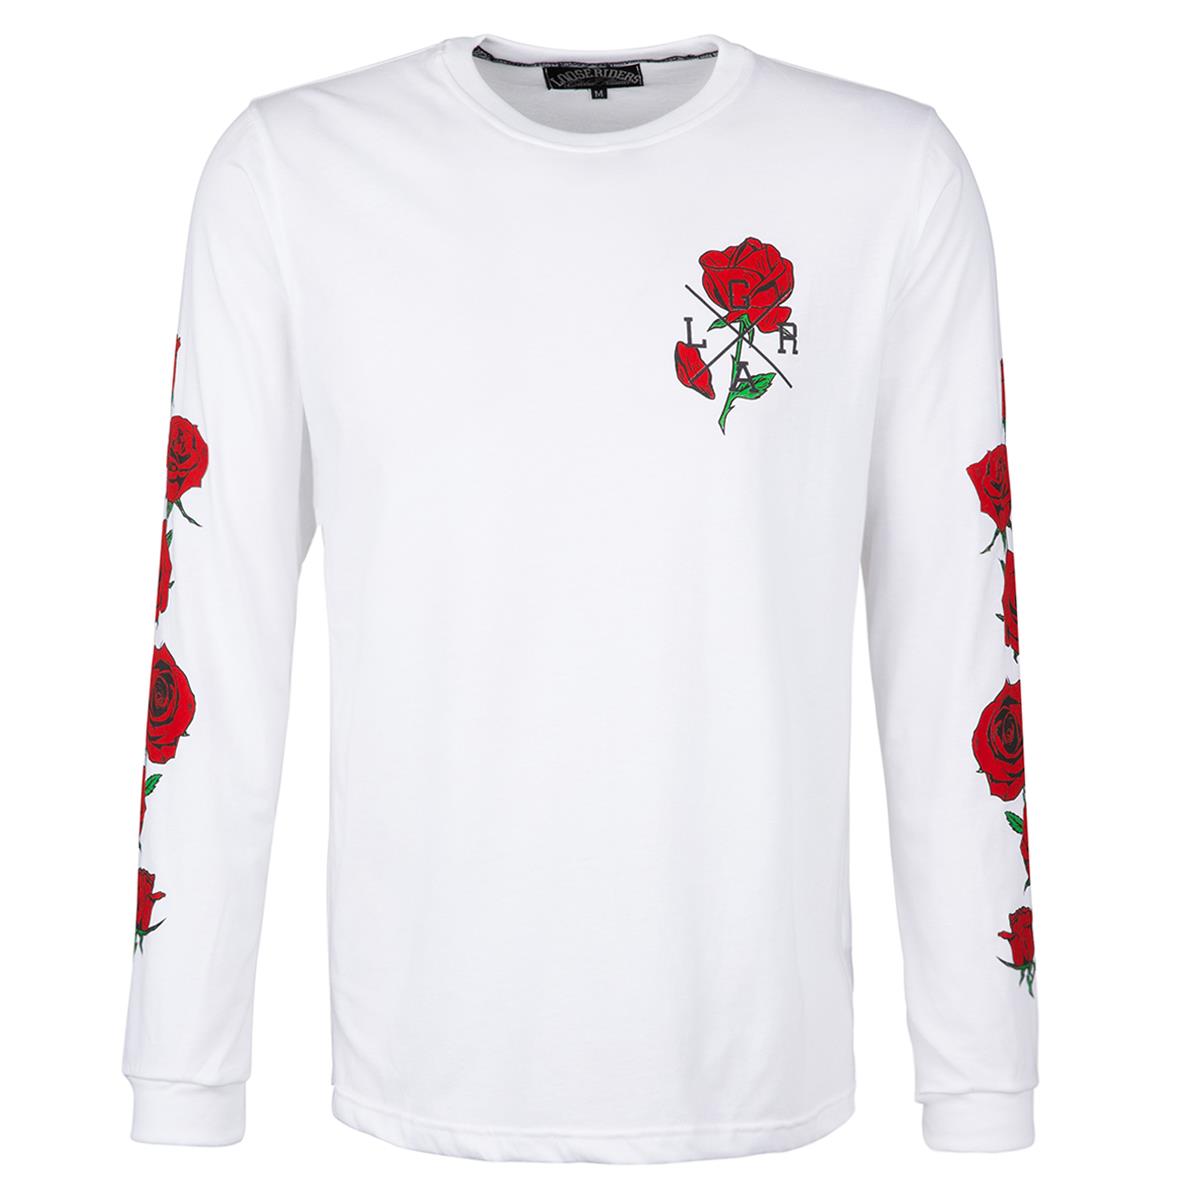 Loose Riders Sweatshirt Roses White/Red